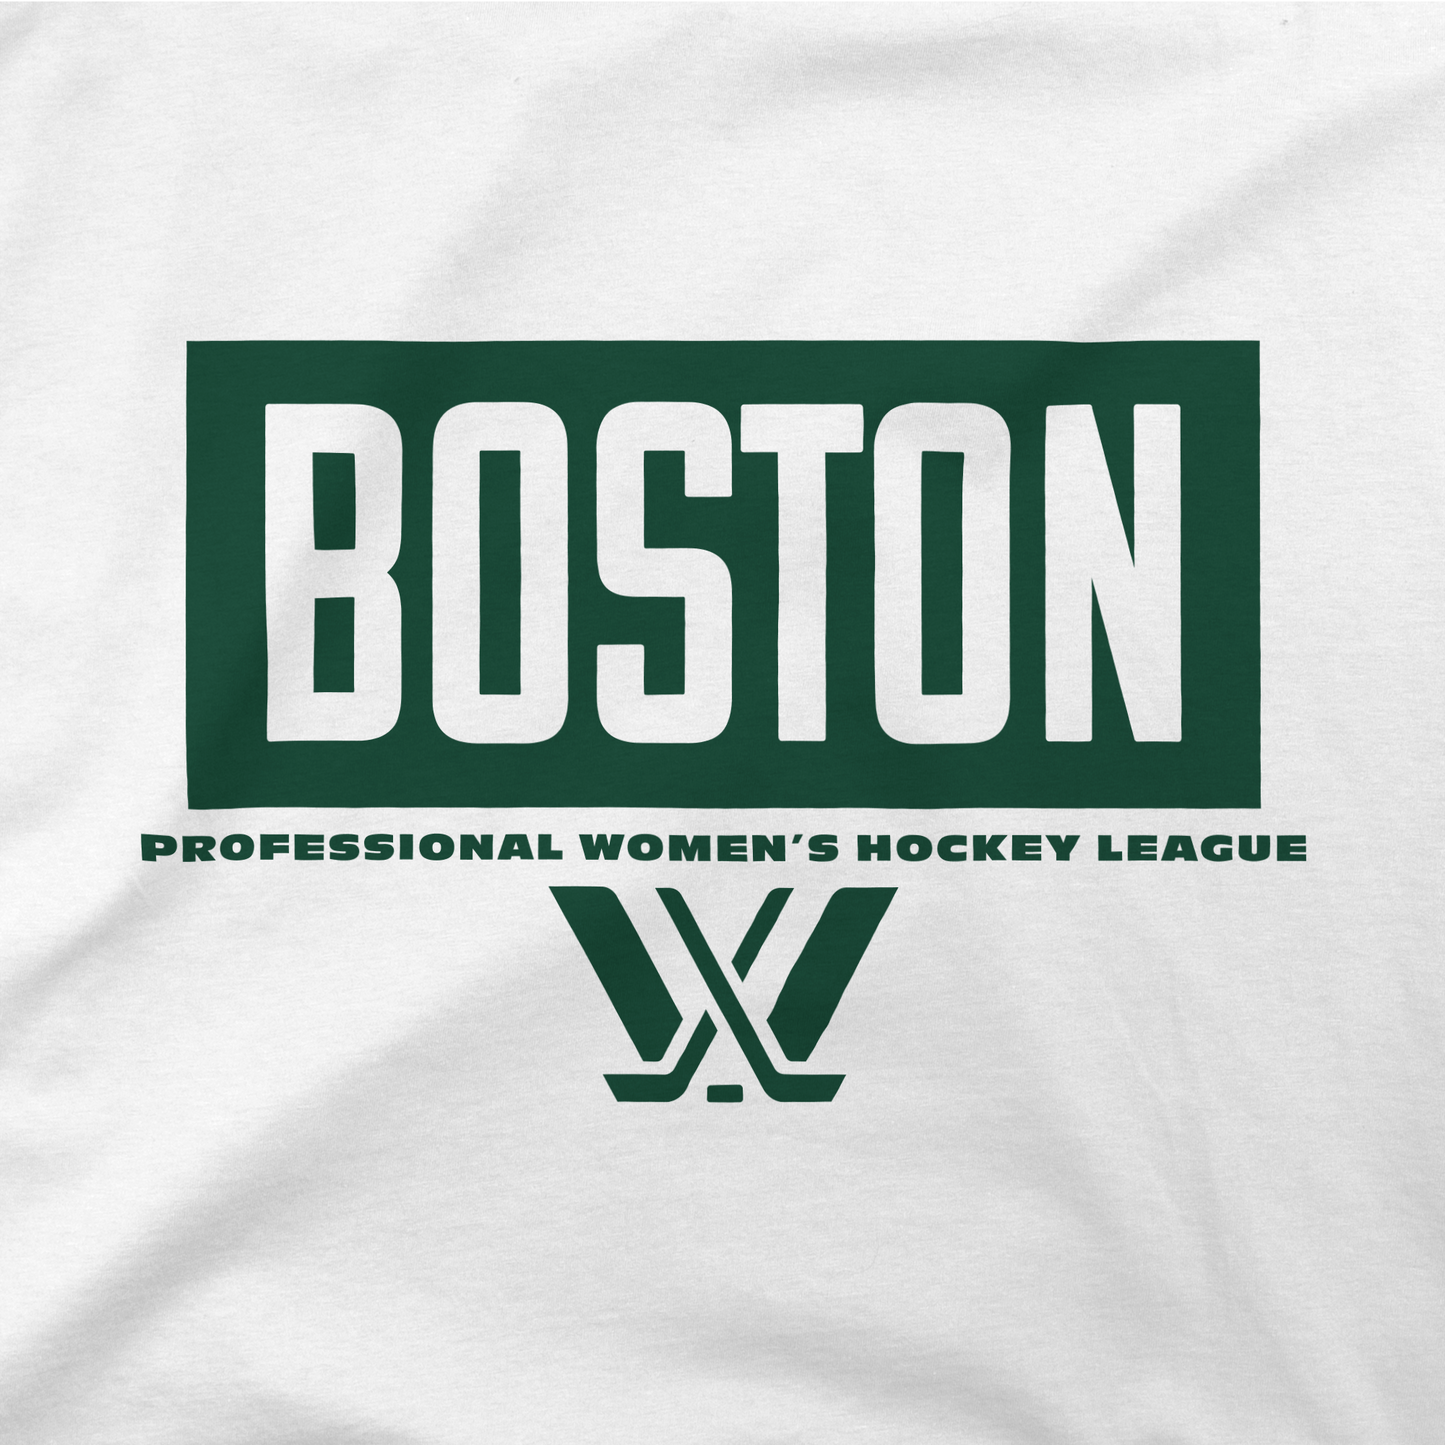 Boston Block Youth T-Shirt